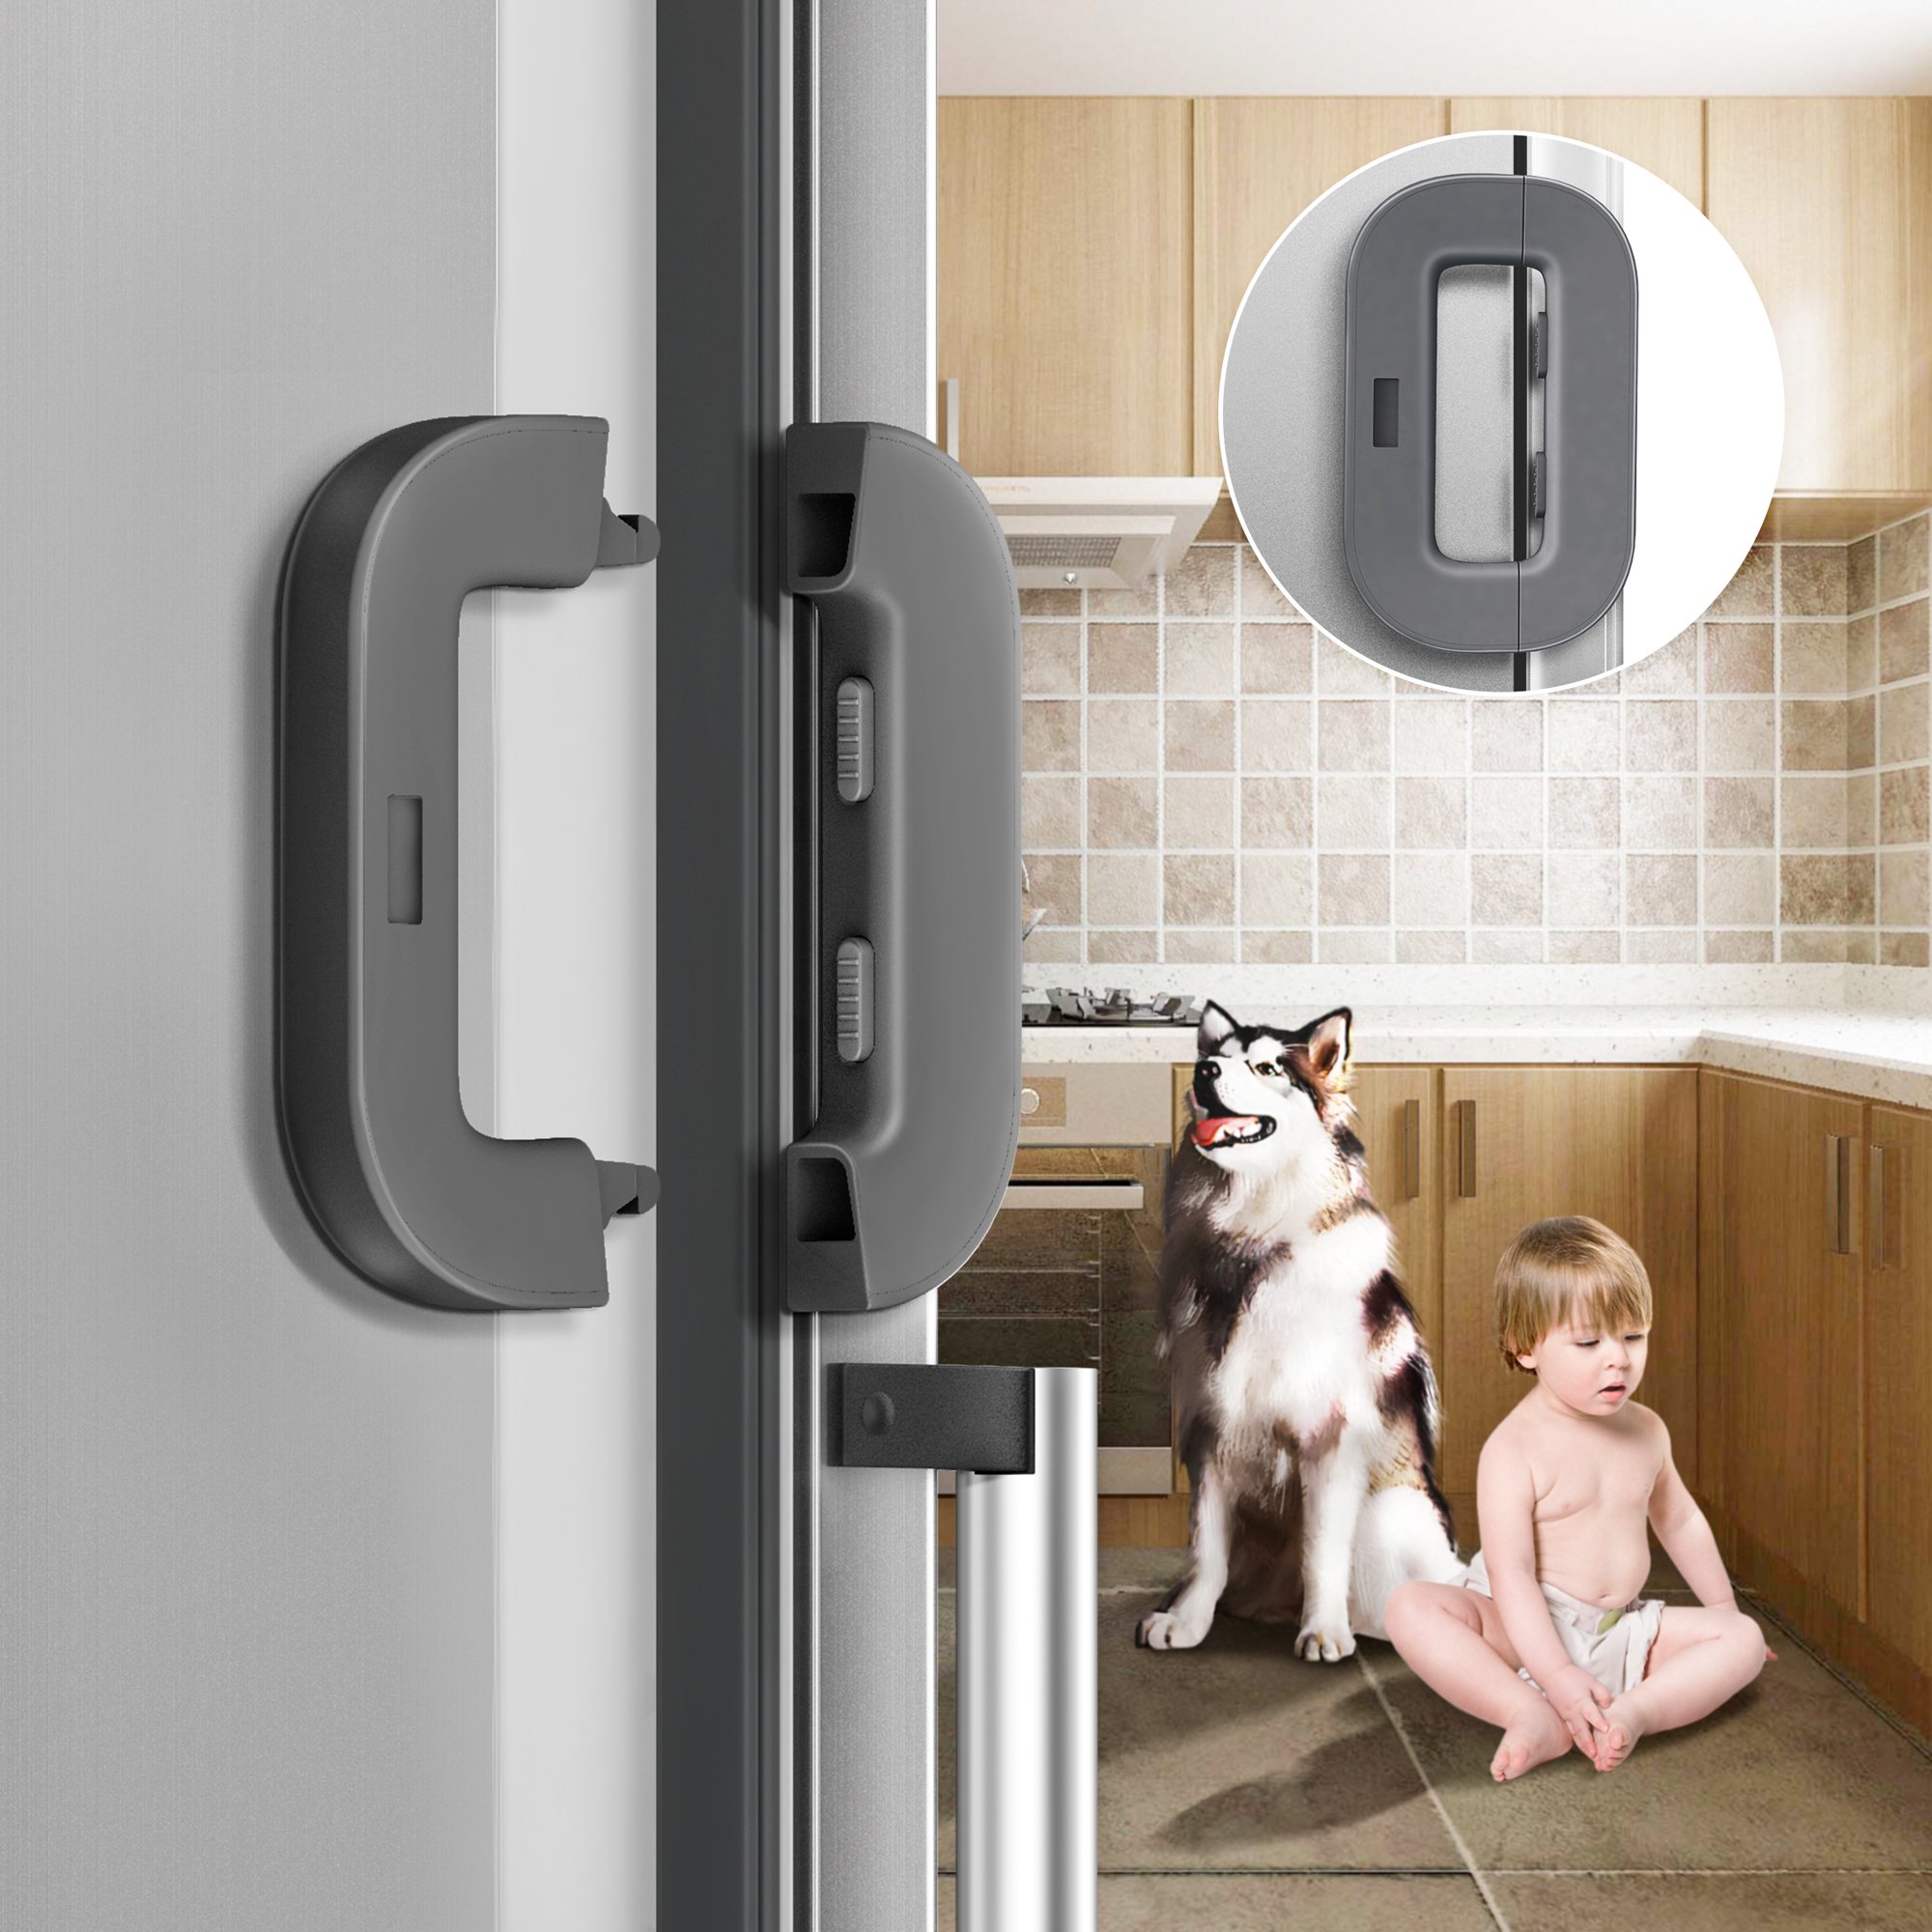 Child Safety Door Locks, WeGuard 2 Pack Adhesive Baby Proof Cabinet Locks and Refrigerator Fridge Freezer Door Lock for Toddler Kids, Drawer Latches